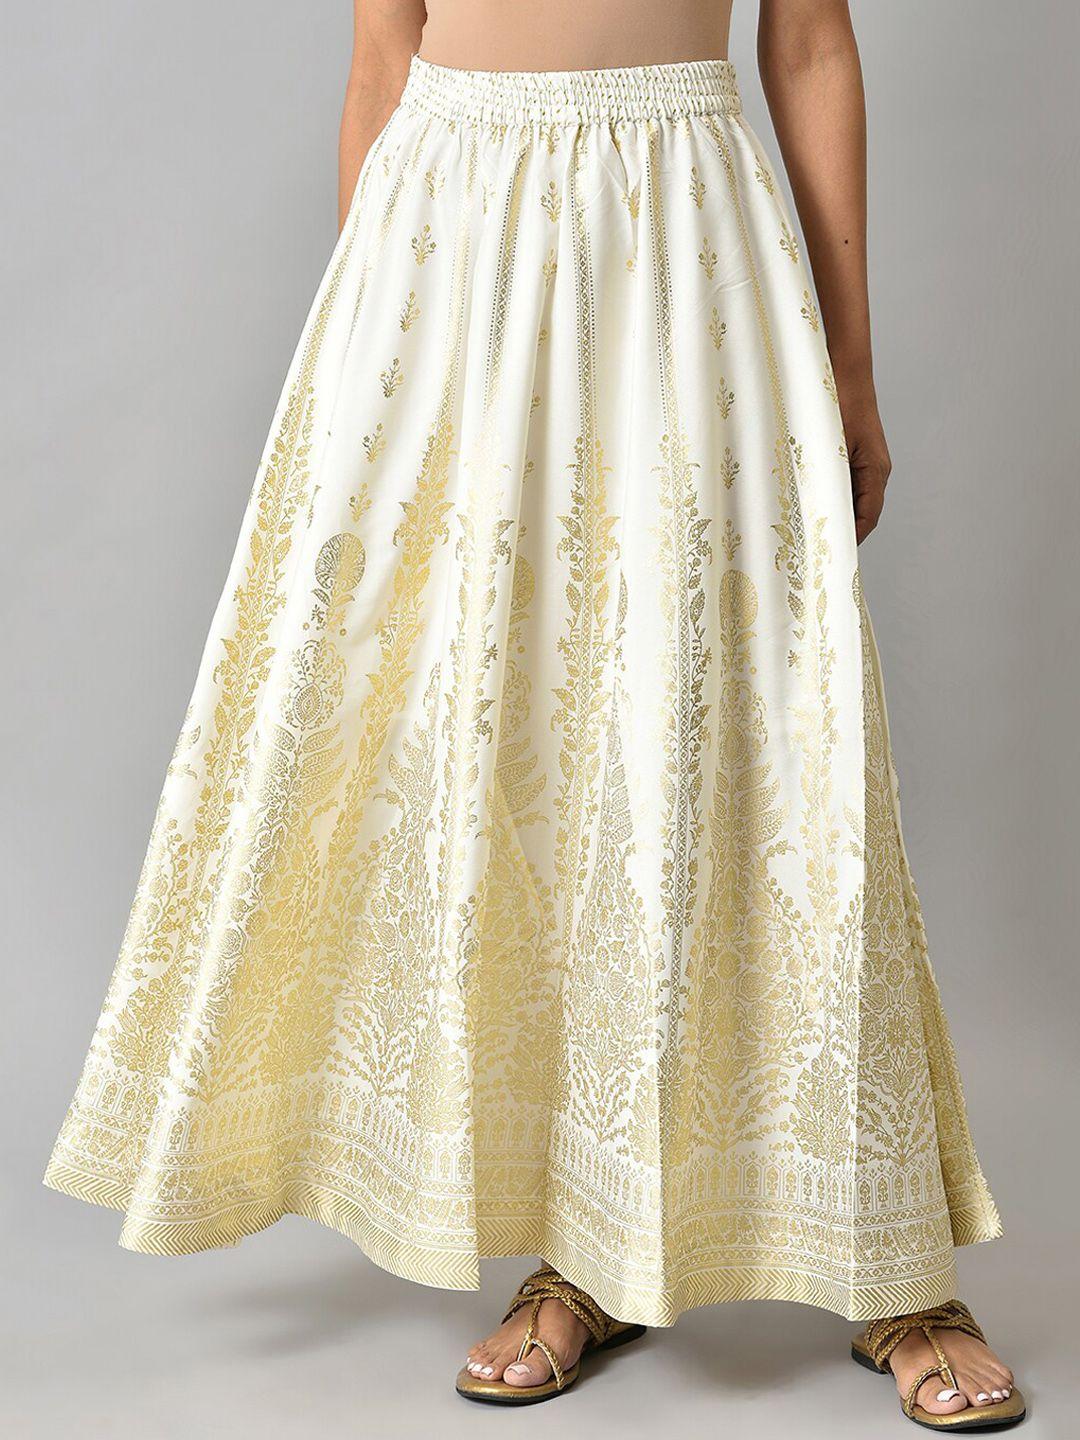 elleven women white floral printed flared maxi skirt